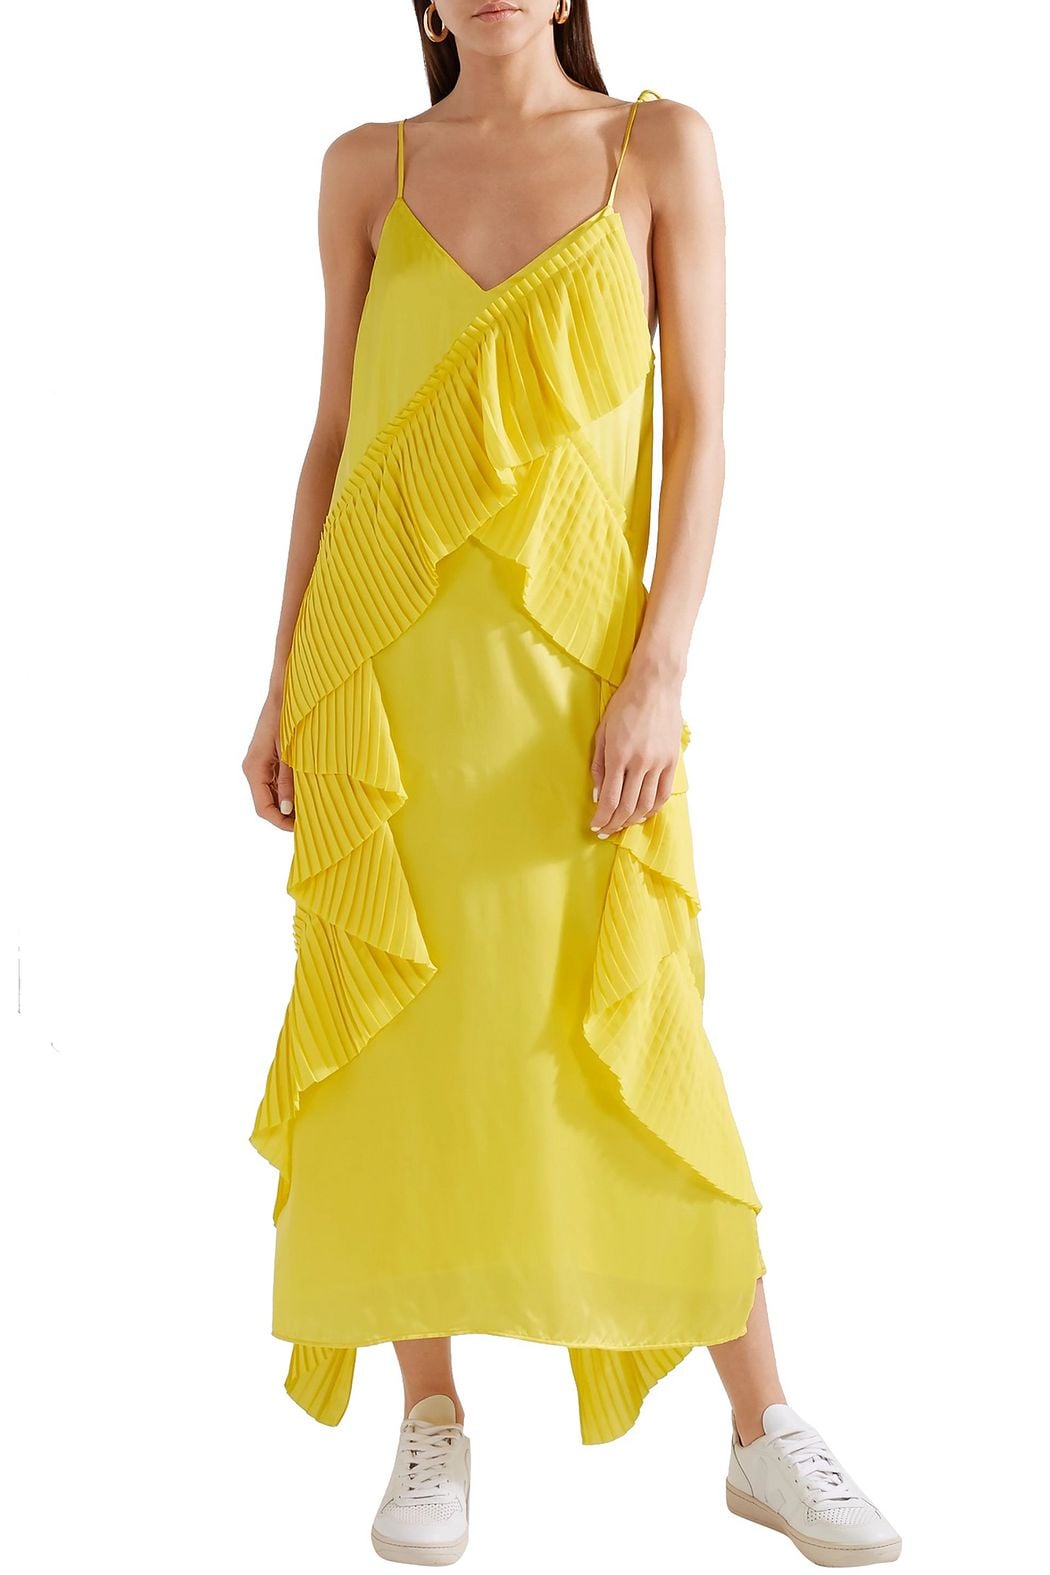 kenzo yellow dress